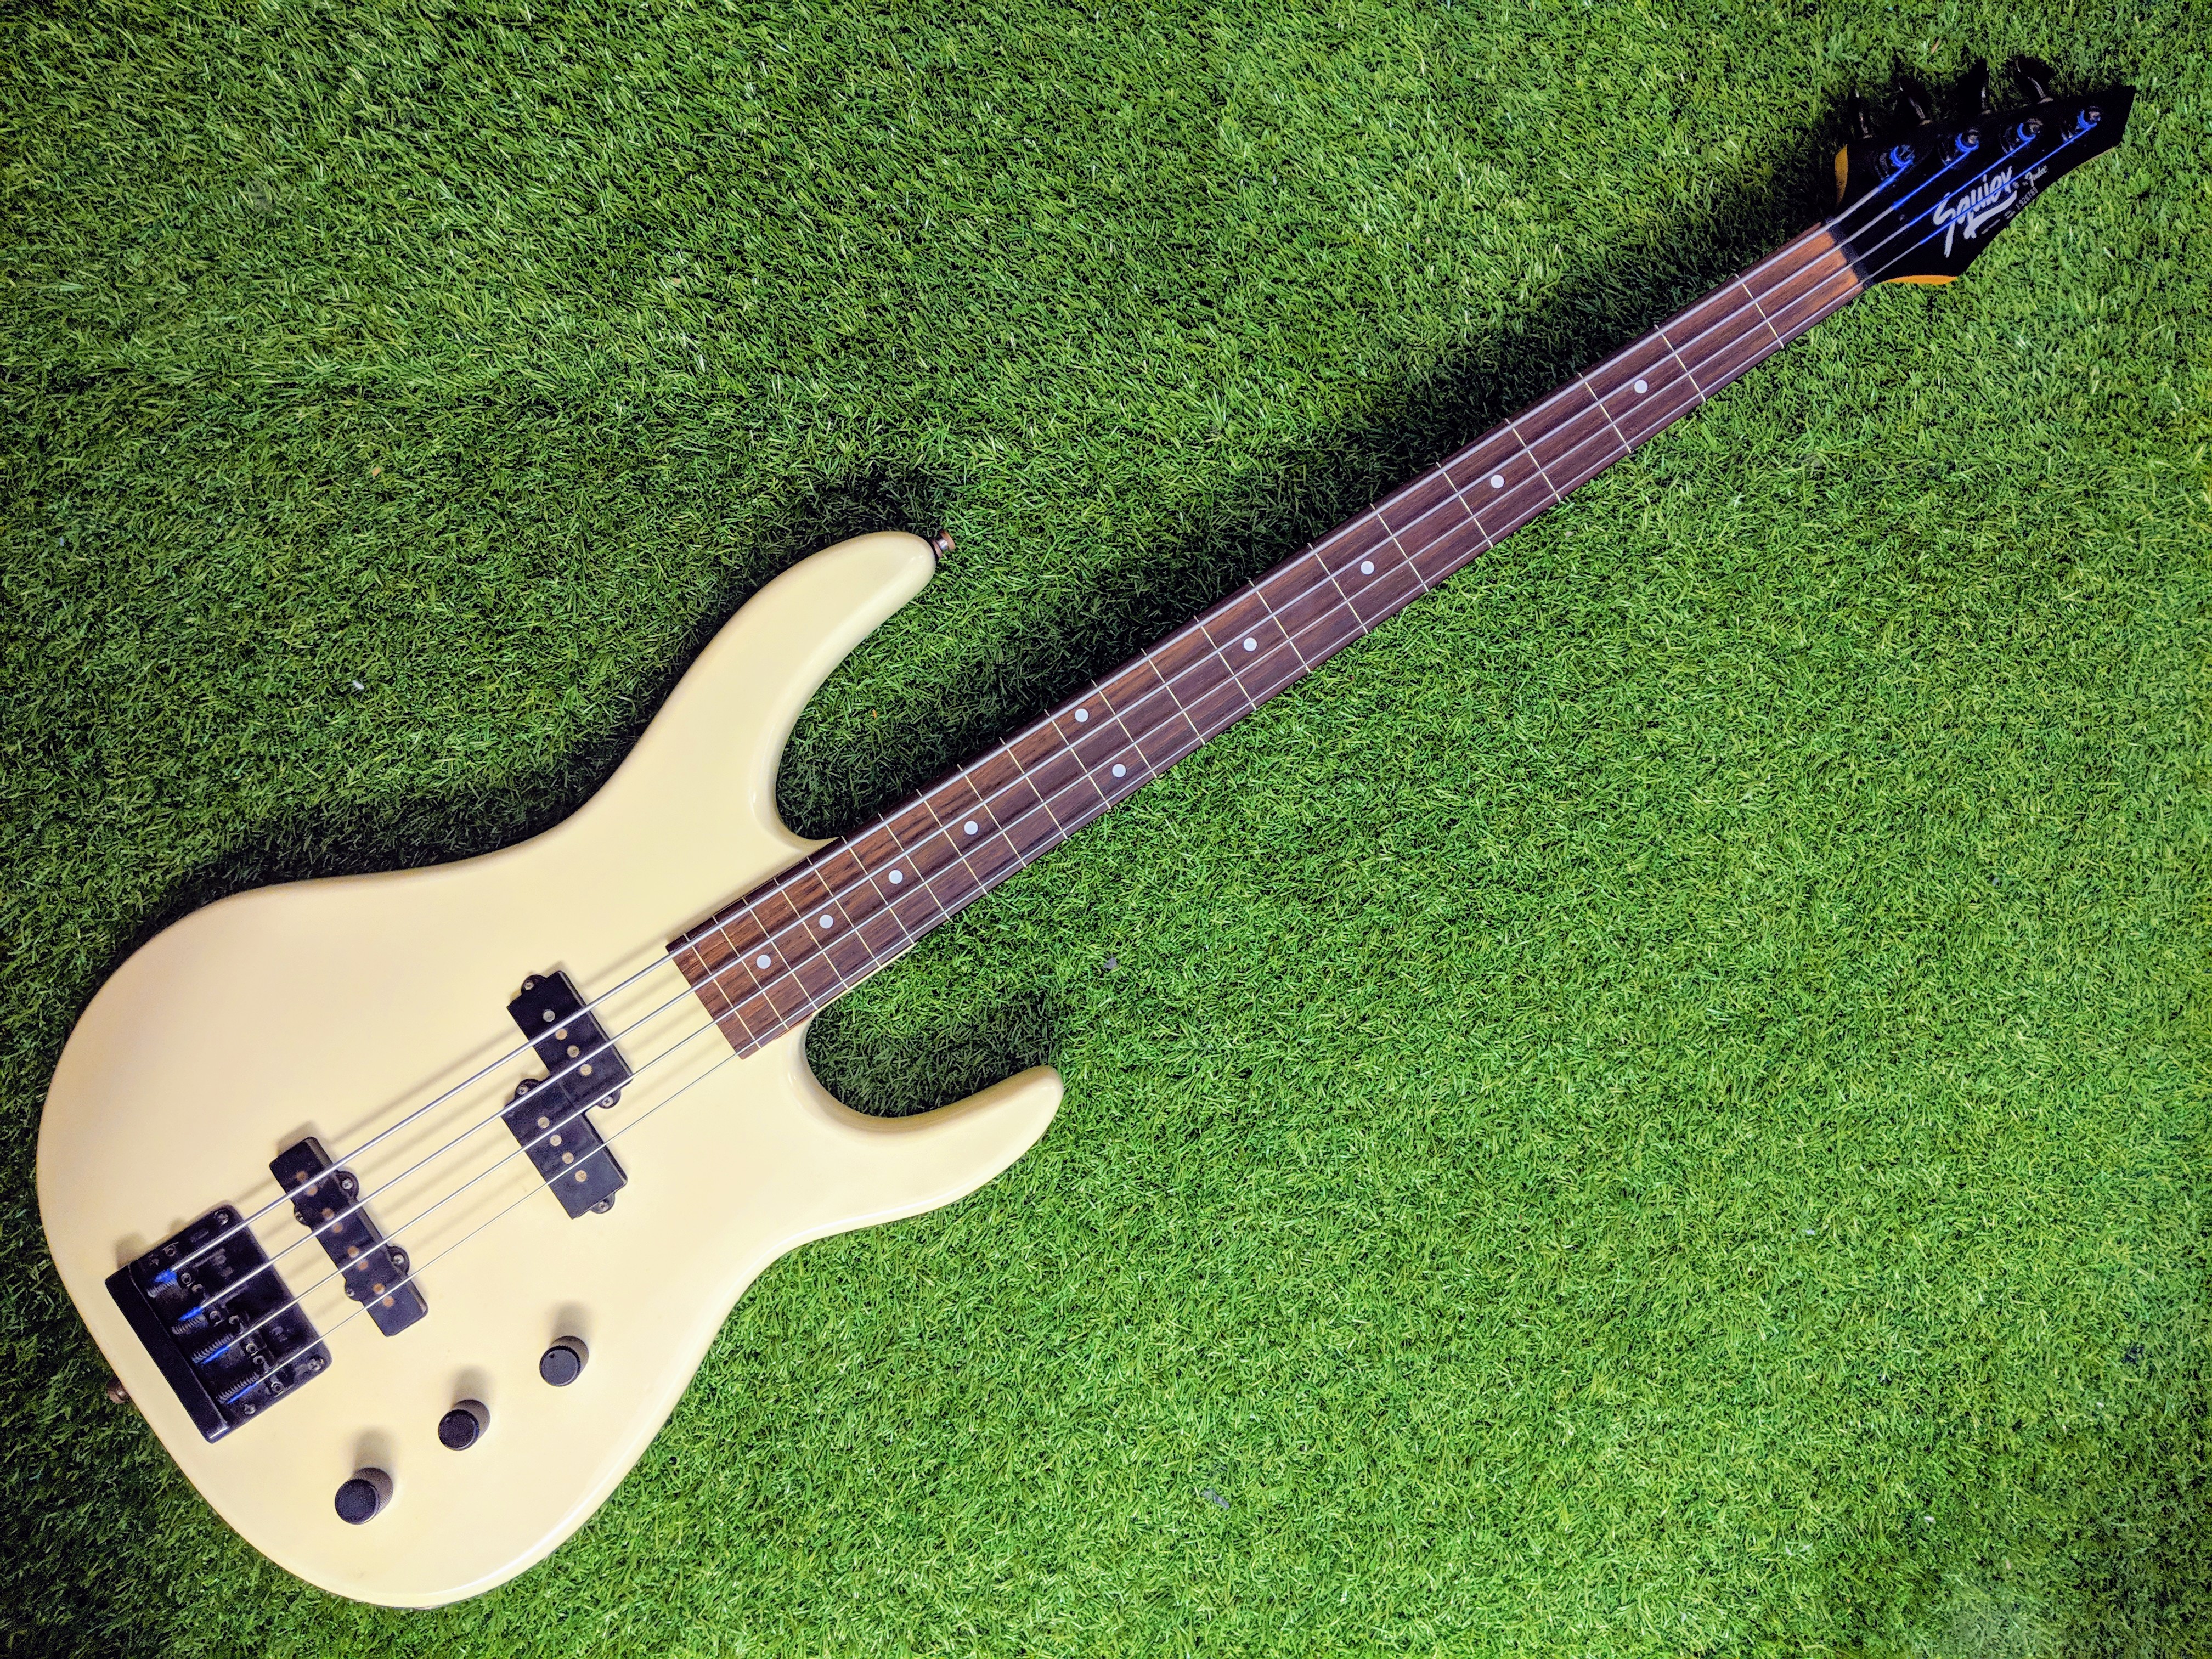 A Squier HM Bass